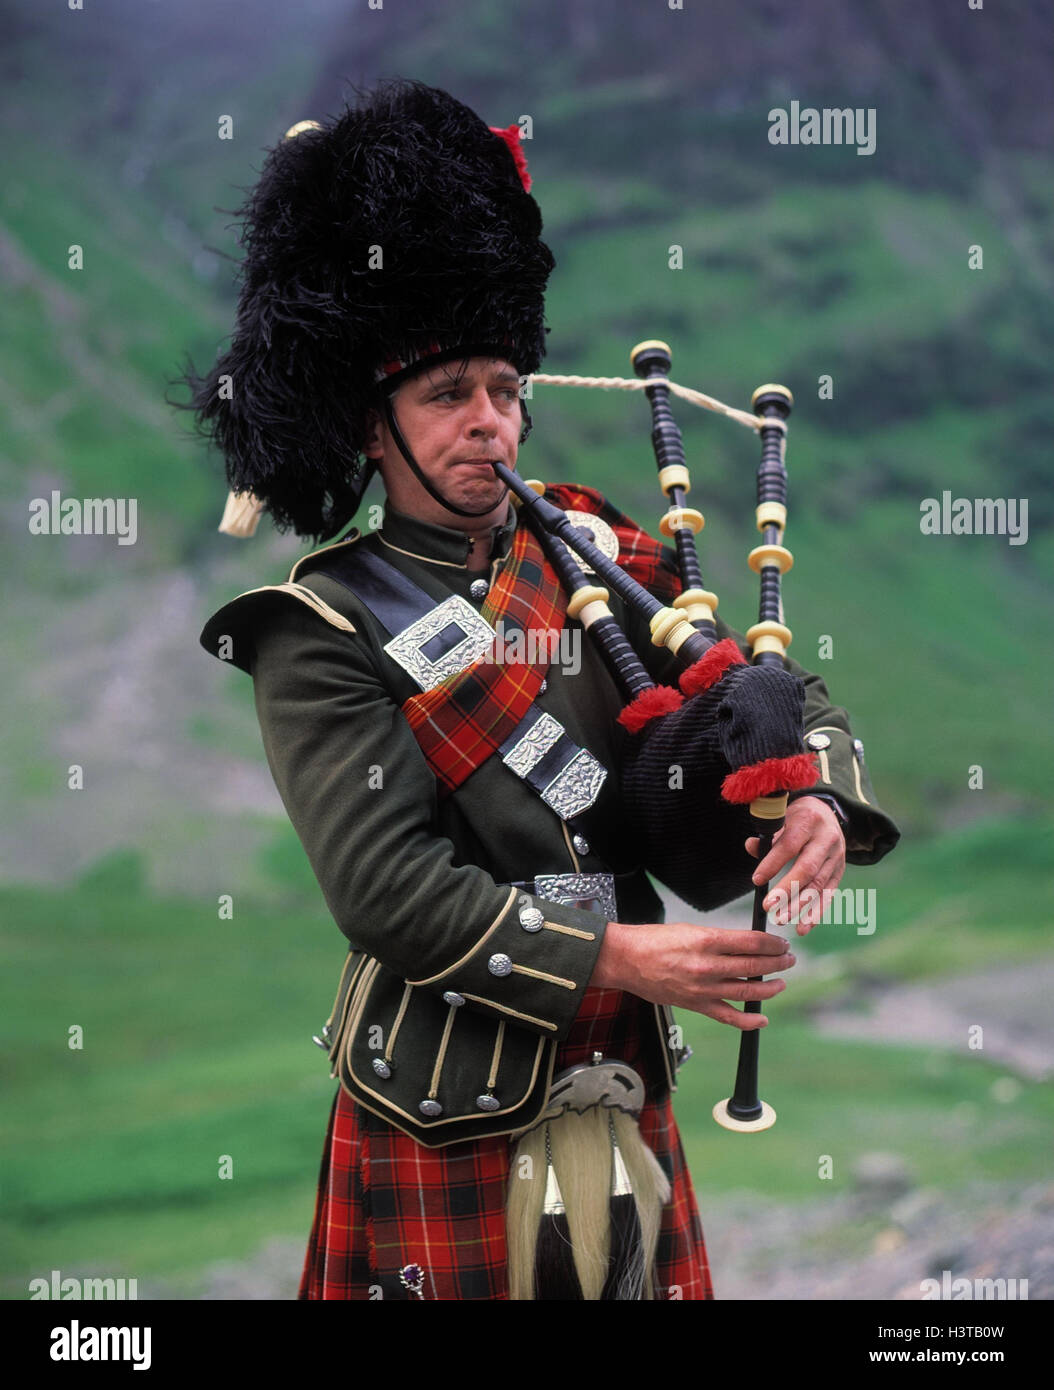 Gran Bretaña, Escocia, gaitas player, instrumentos musicales, instrumentos,  instrumento de viento, típicamente, gaitas, traje nacional, exterior  Fotografía de stock - Alamy